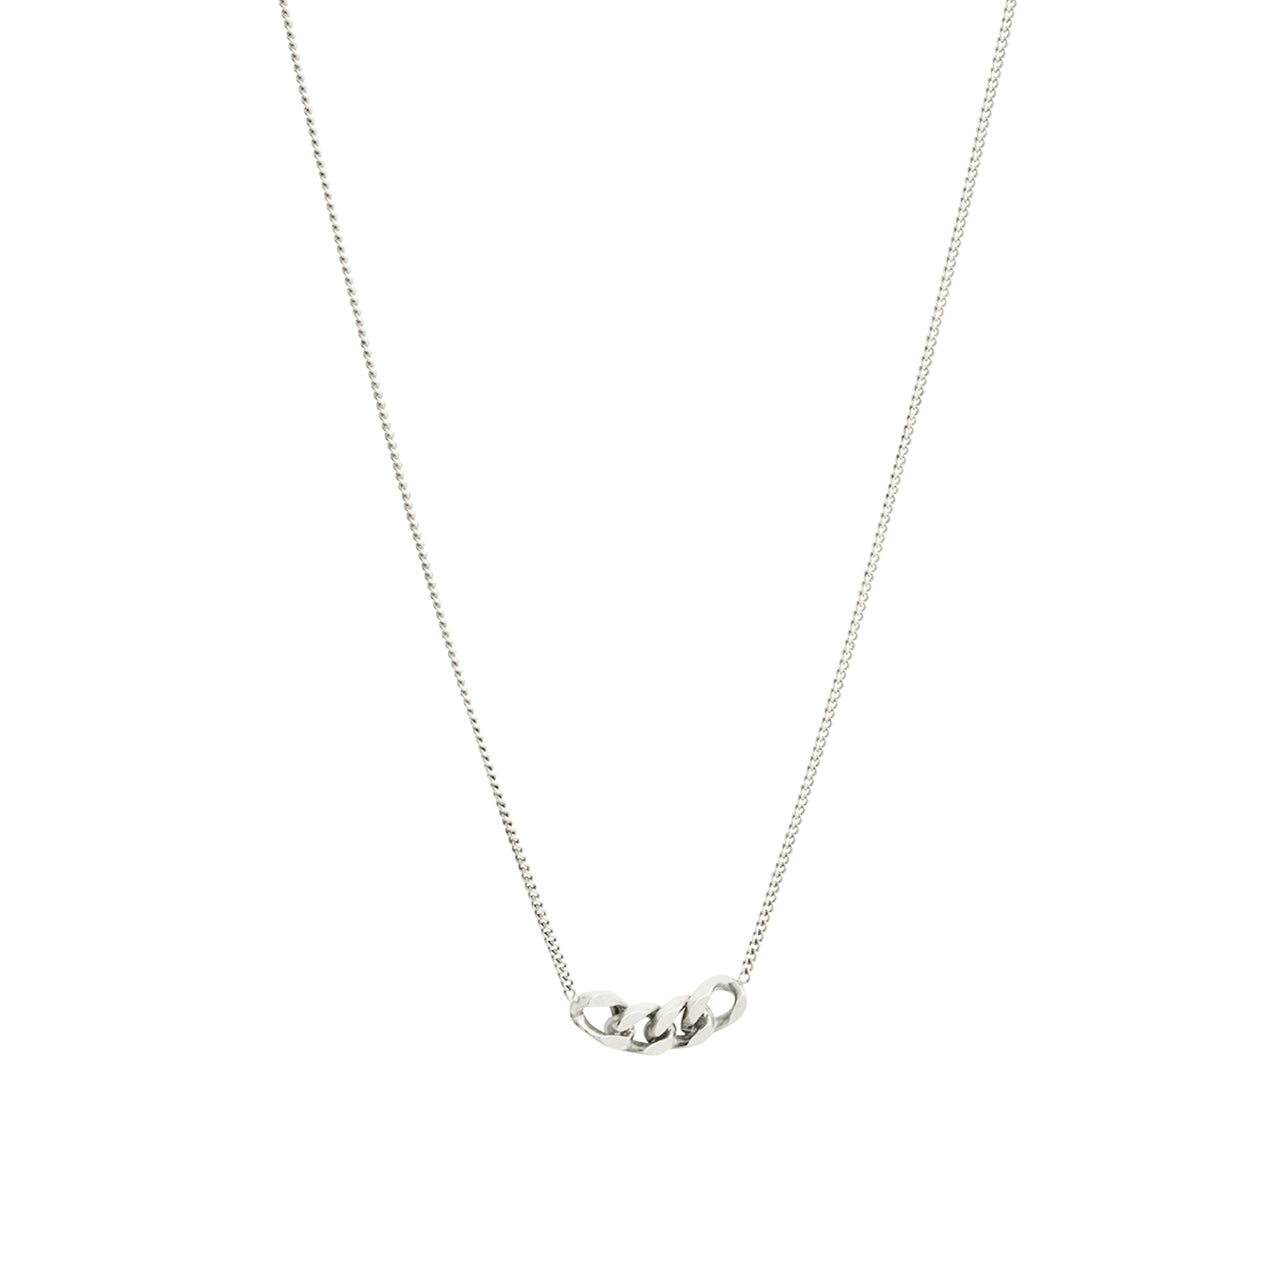 silver four link pendant necklace